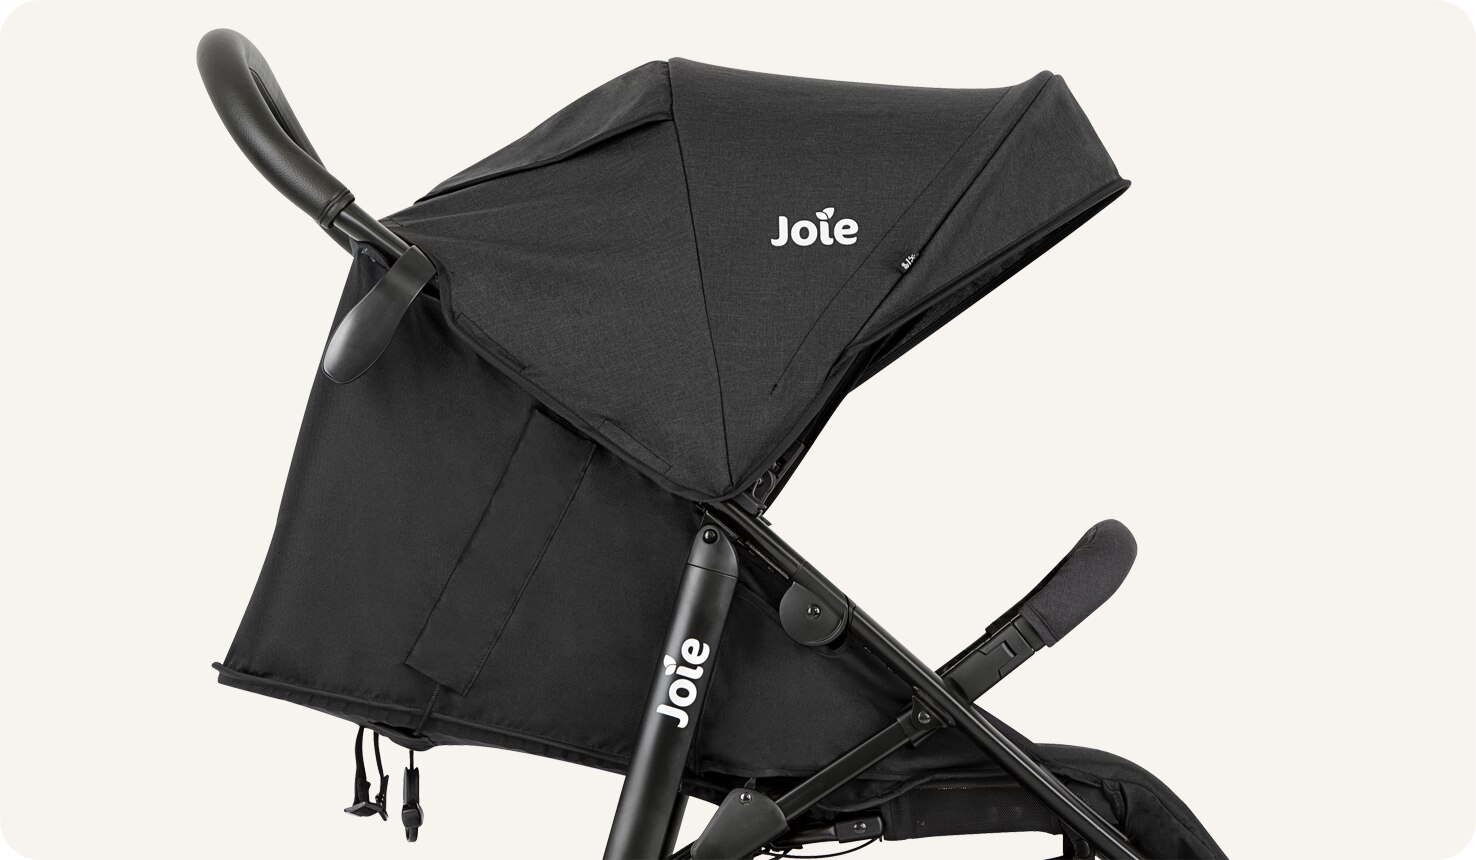  JoIe black litetrax S stroller fully reclined facing right. 